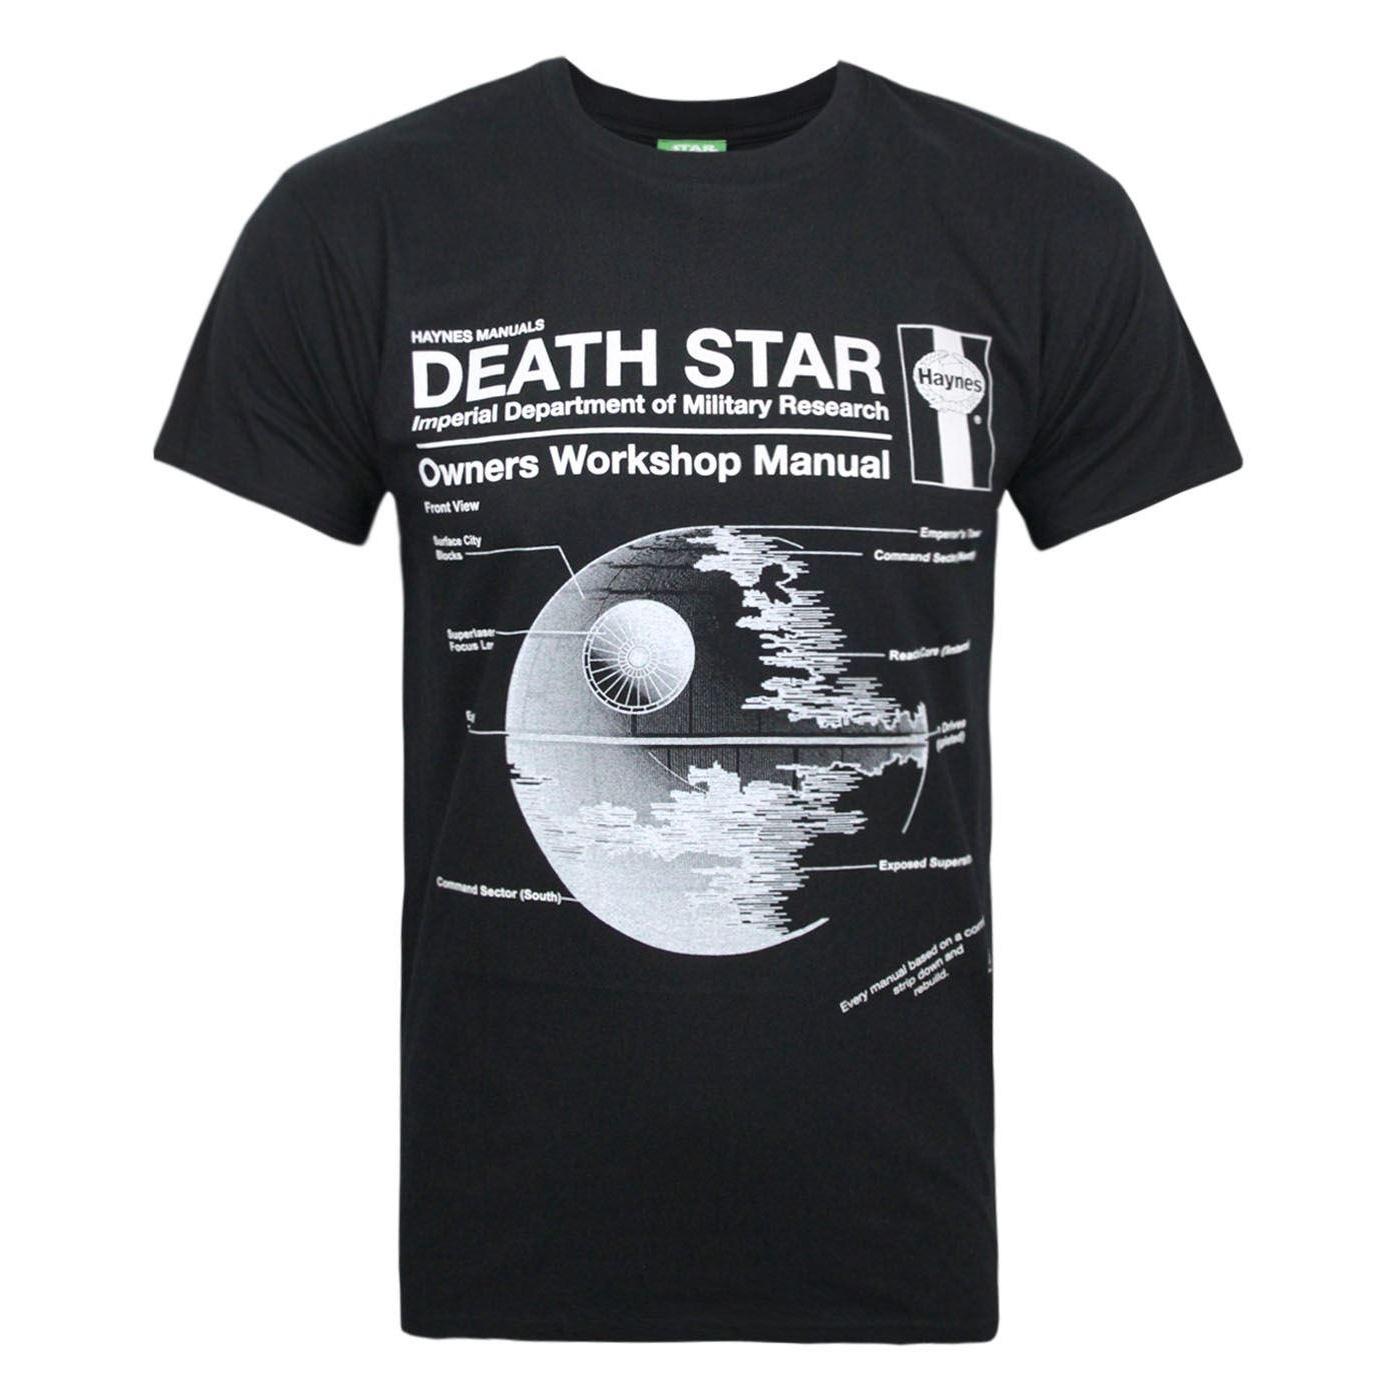 Star Wars officieel heren Haynes Manual Death Star T-shirt